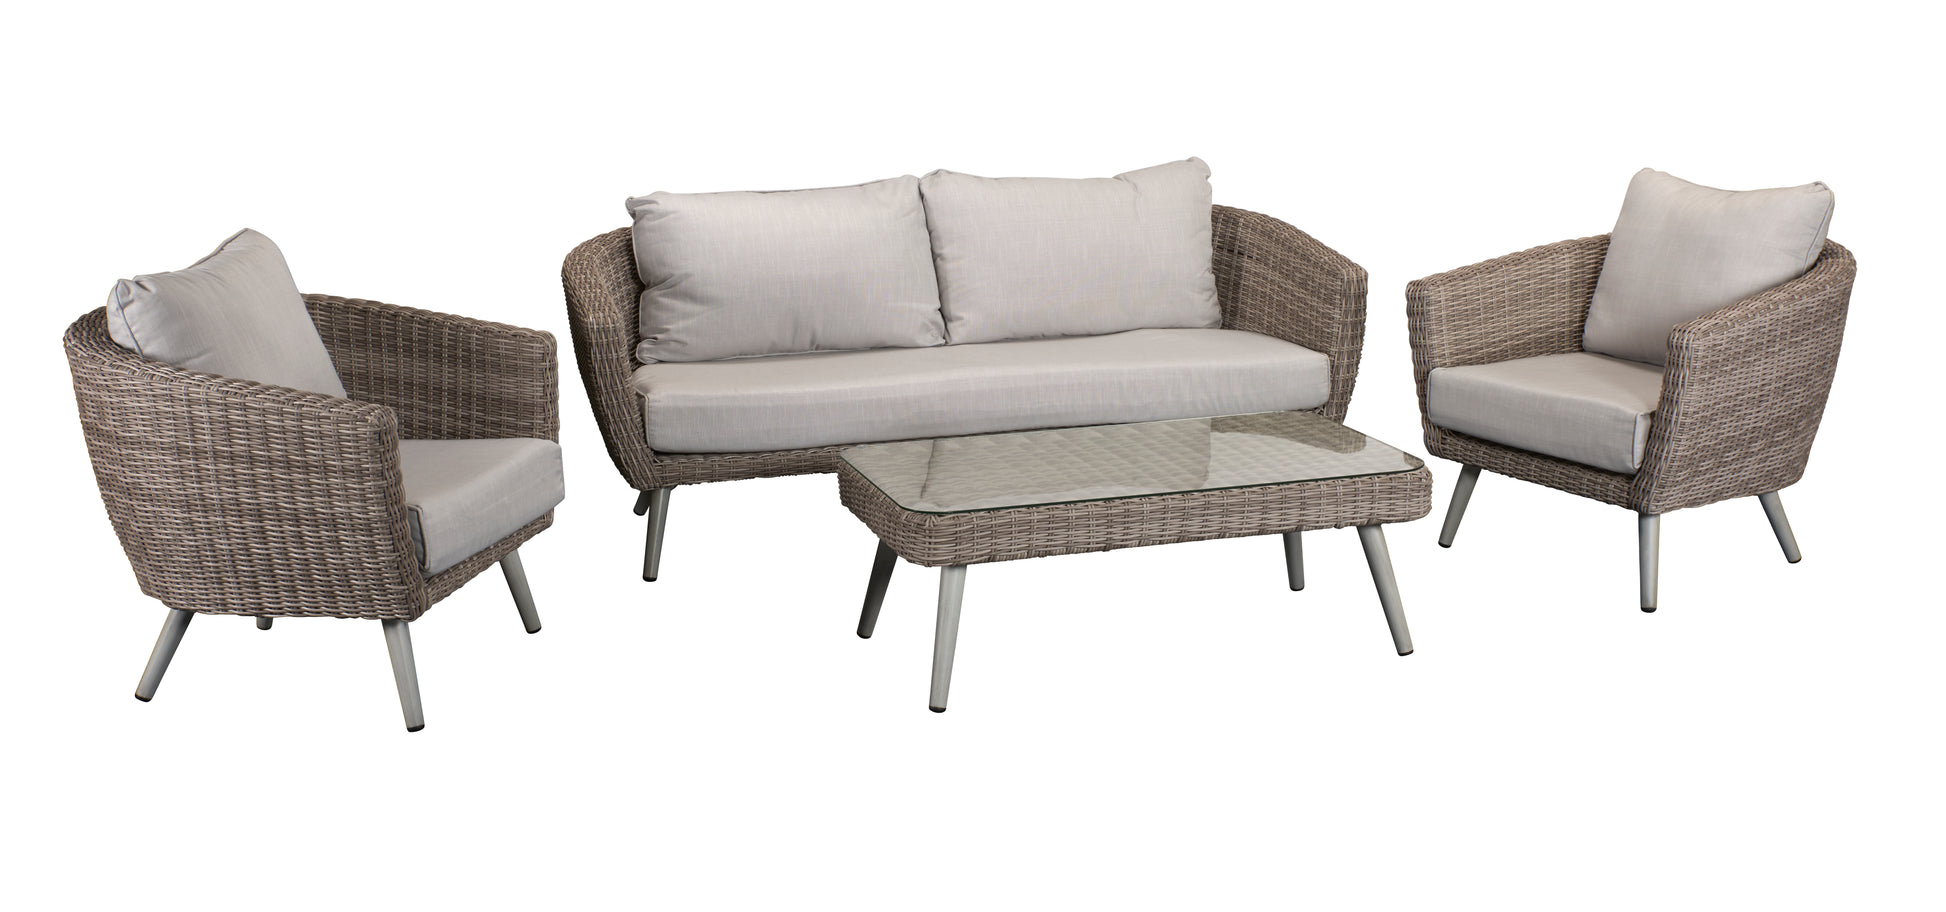 Signature Weave - Daniel Tub Style Sofa Set - Beyond outdoor living